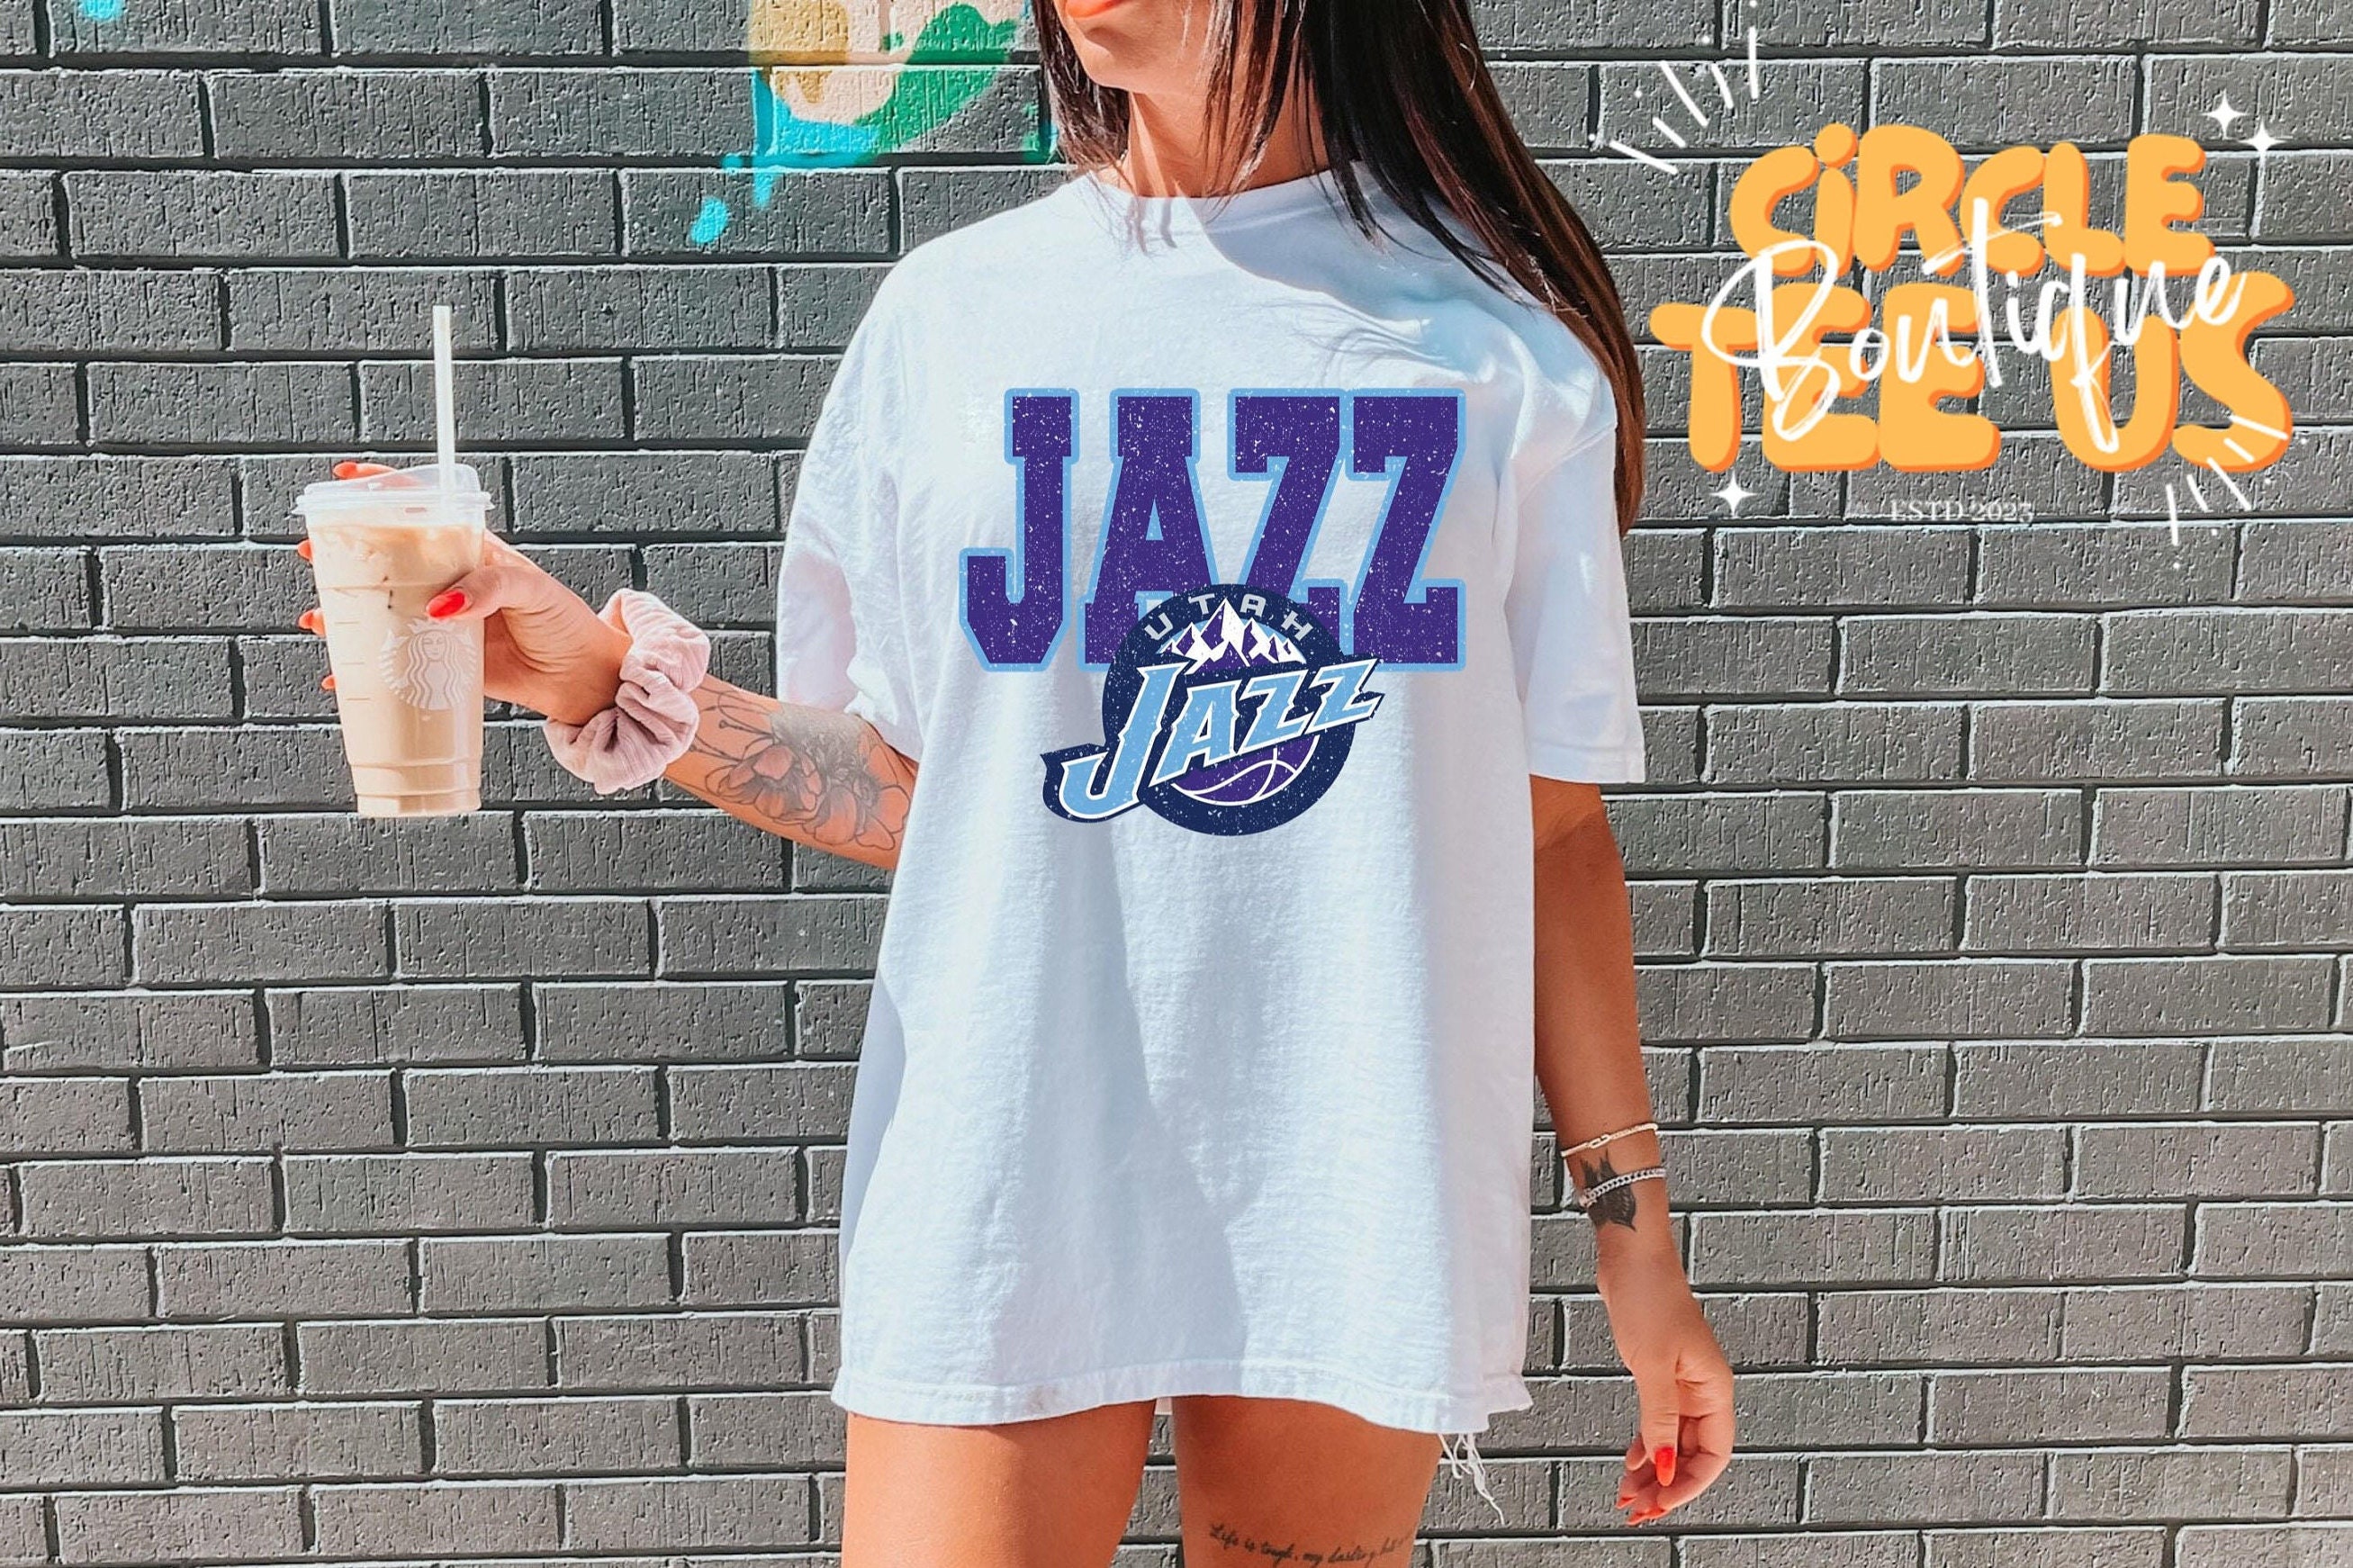 adidas Deron Williams Utah Jazz NBA Pink Official Fan Fashion Basketball  Jersey for Girls (XL) : : Sports & Outdoors